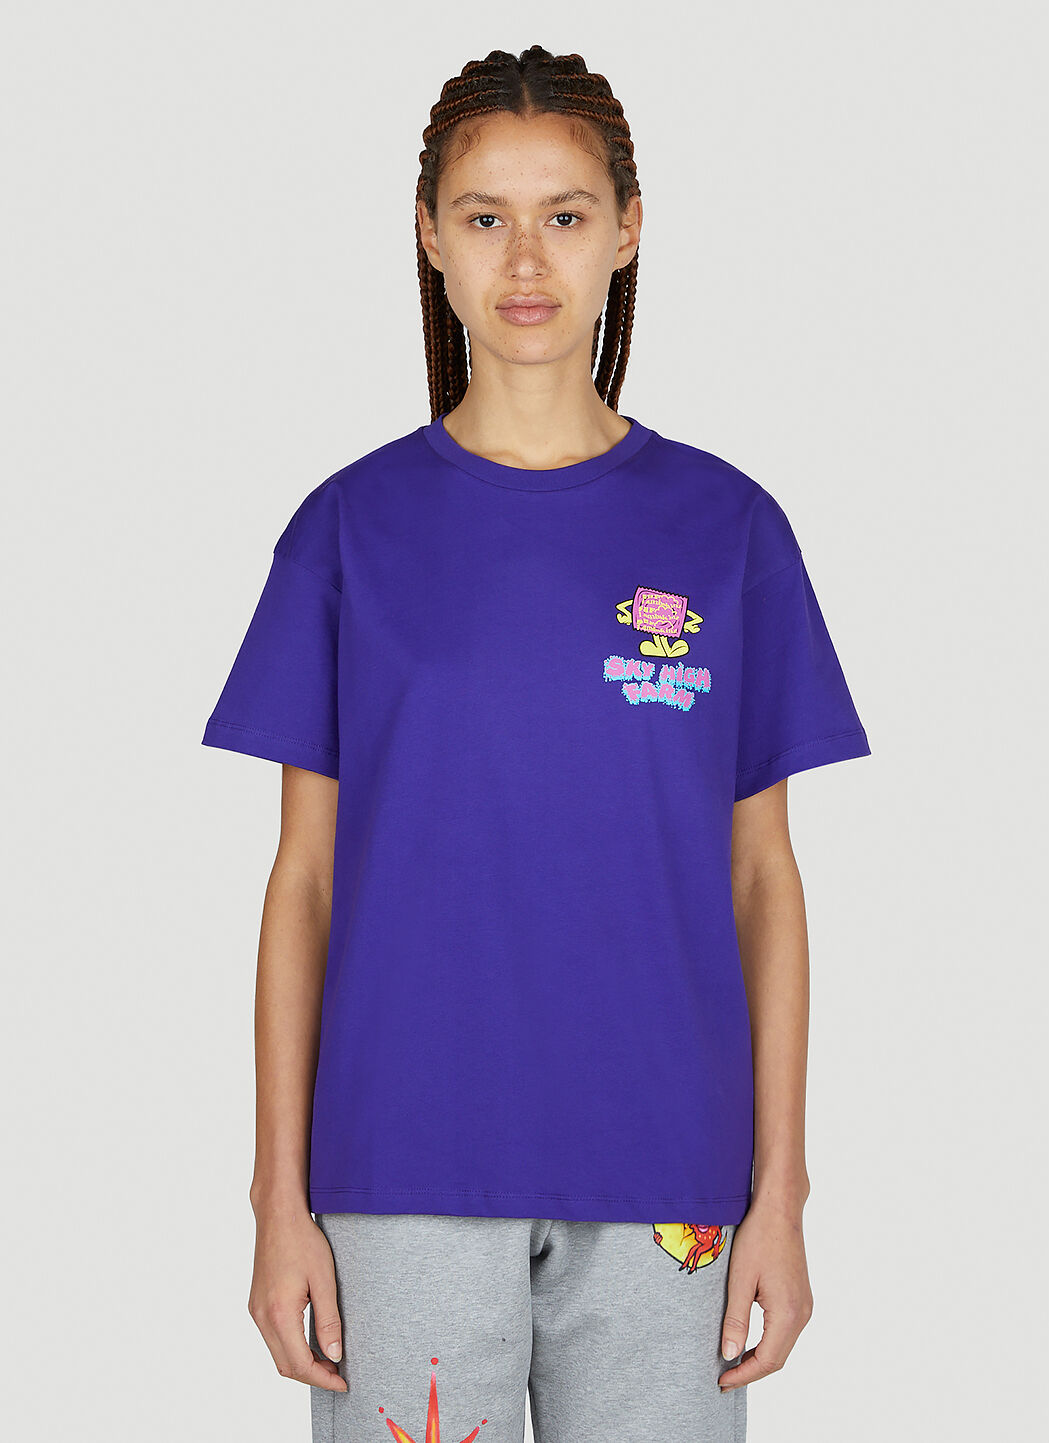 Sky High Farm Workwear 프린트 티셔츠 화이트 skh0354012